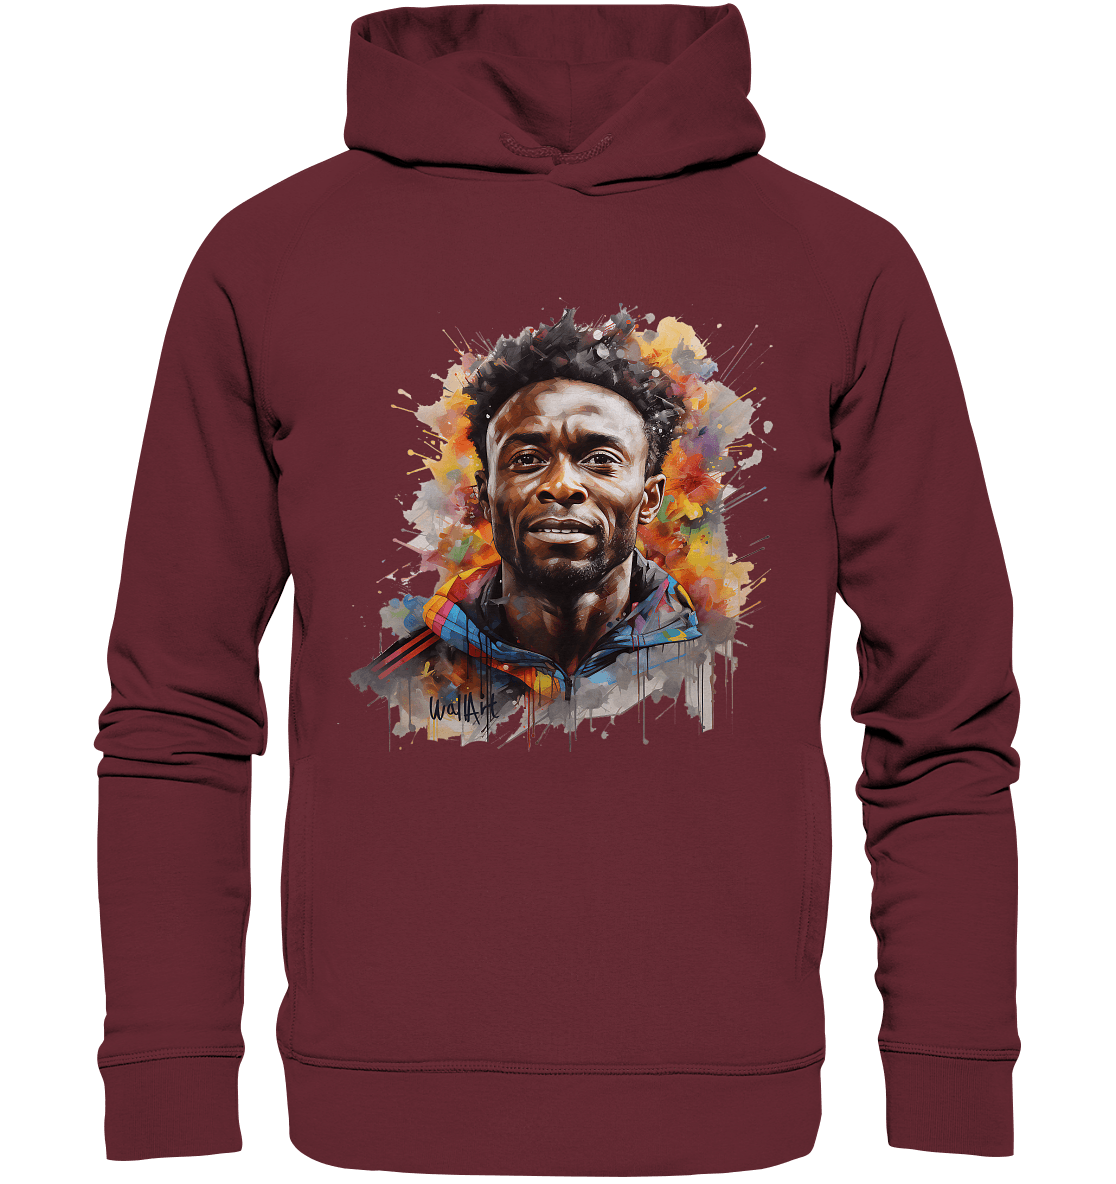 WallArt - Pelé - Organic Fashion Hoodie - Snapshirts